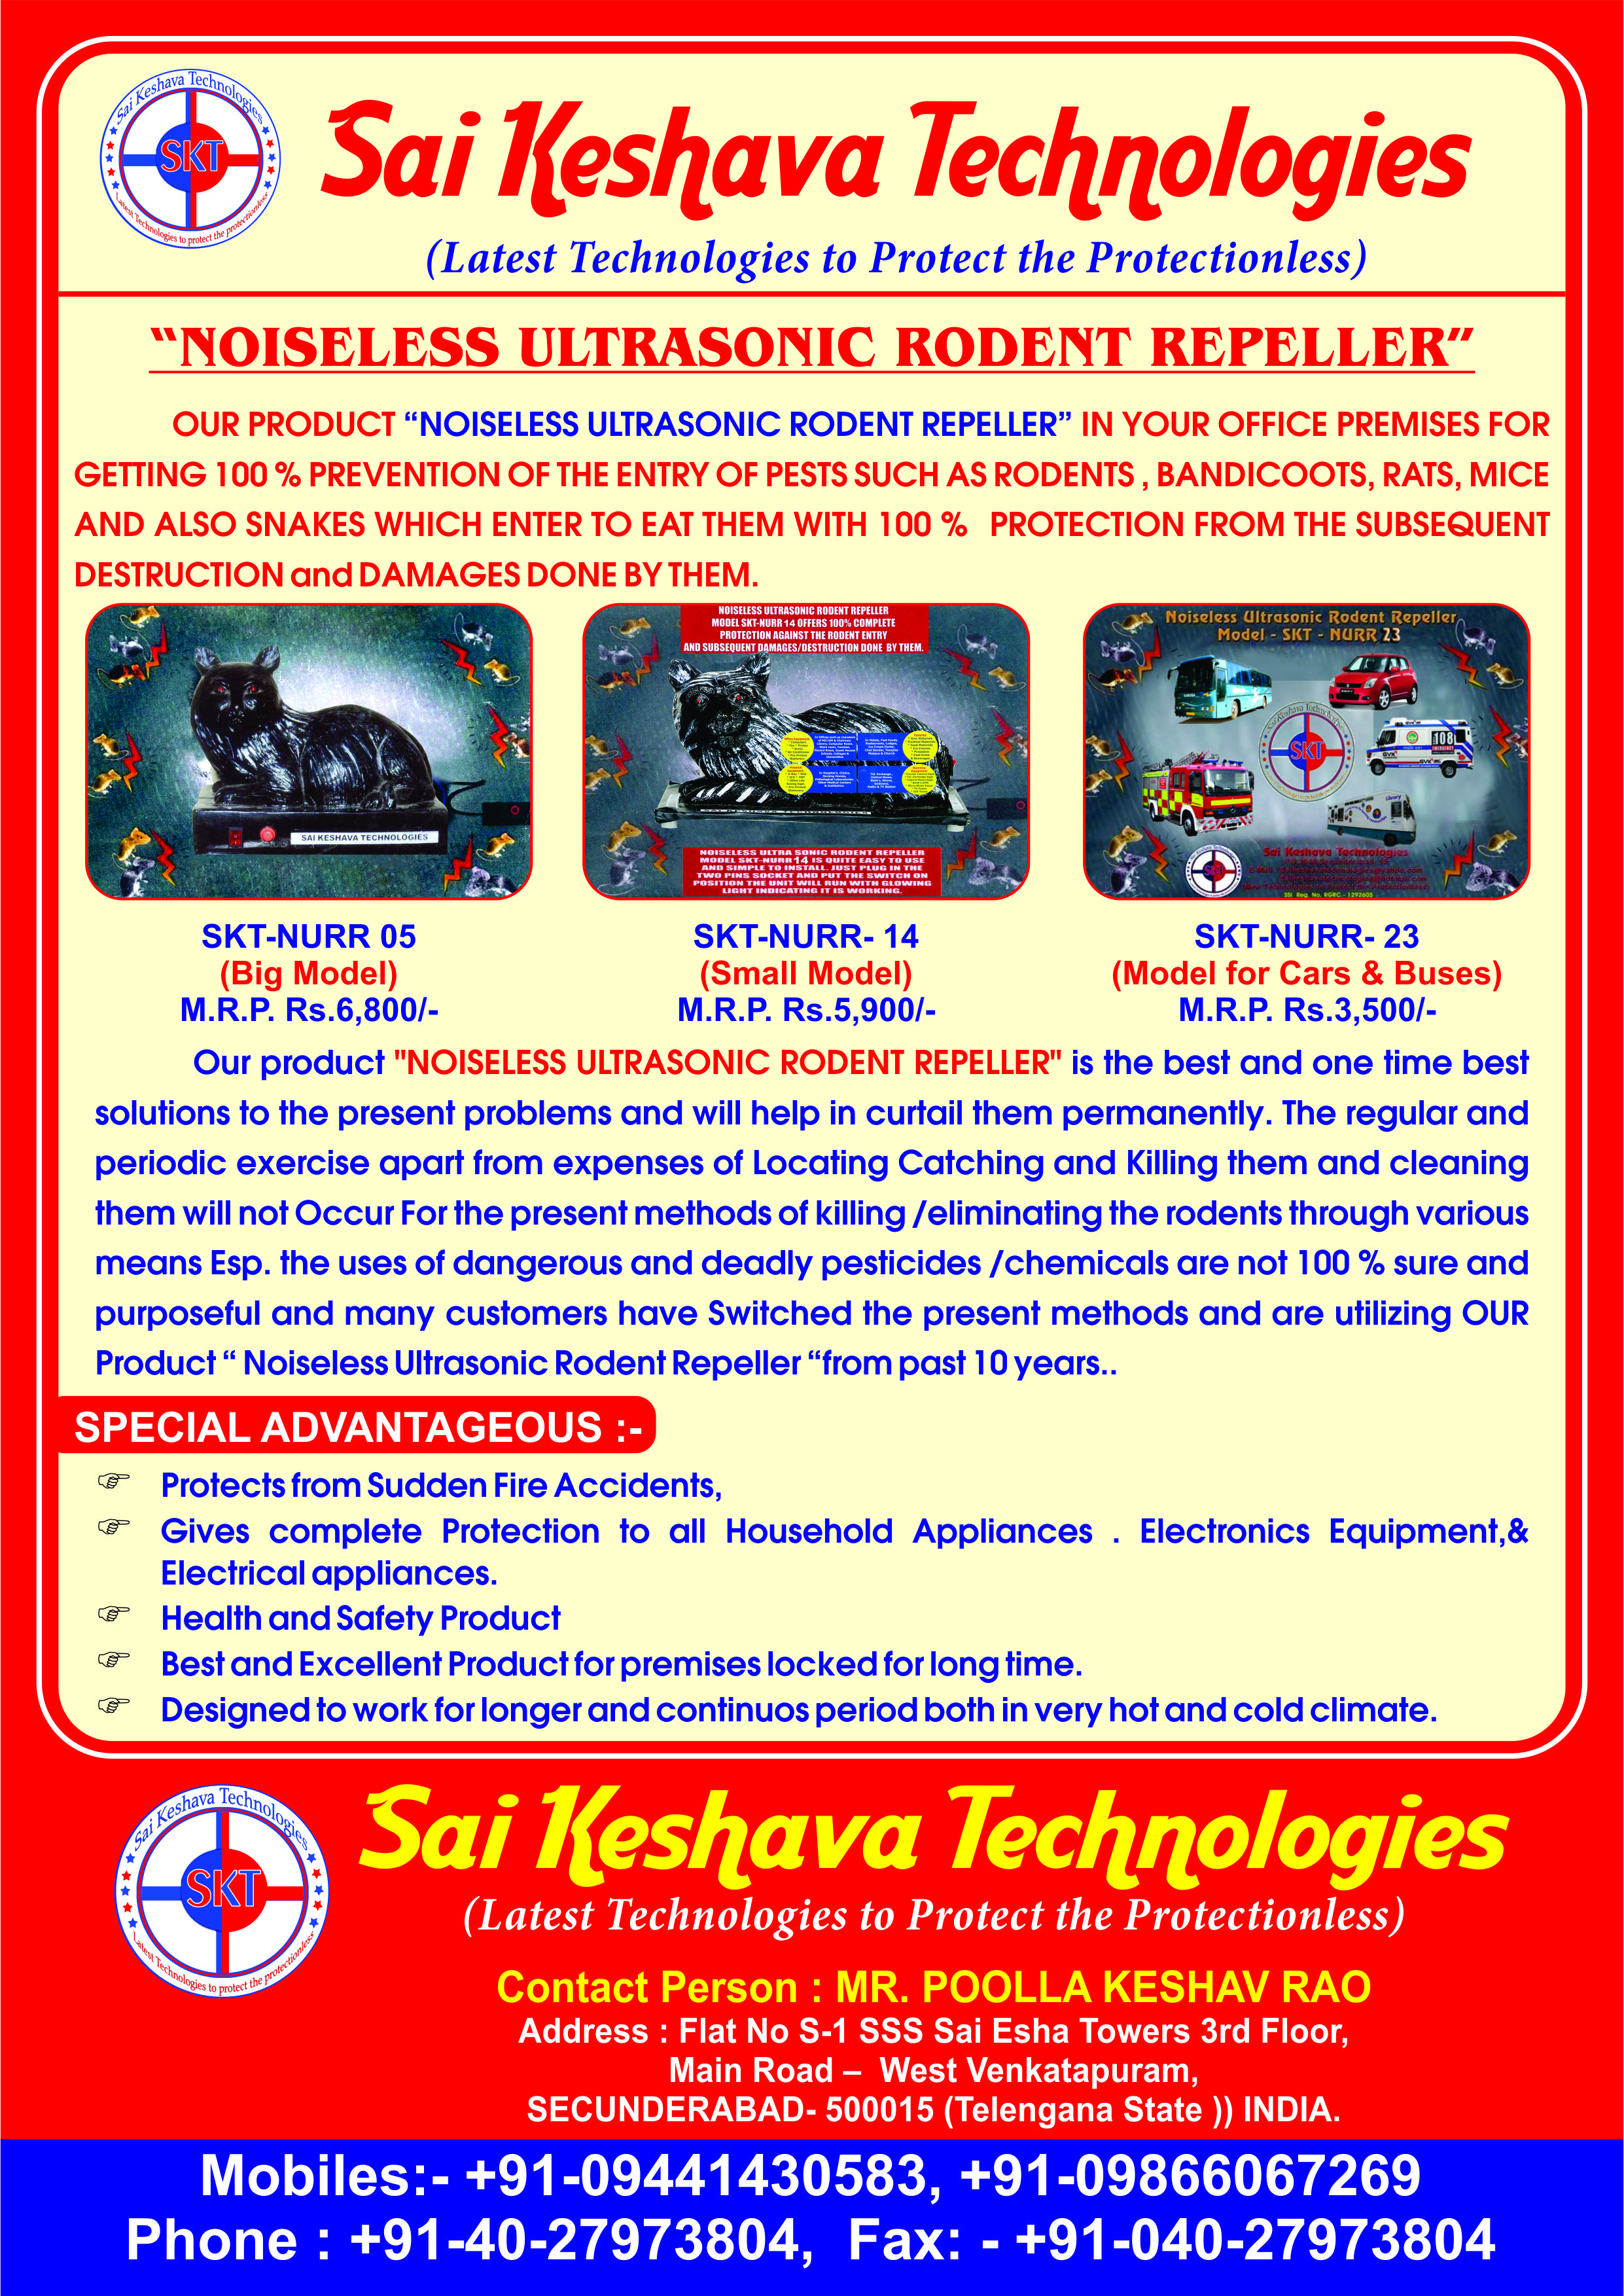 Sai Keshava Technologies